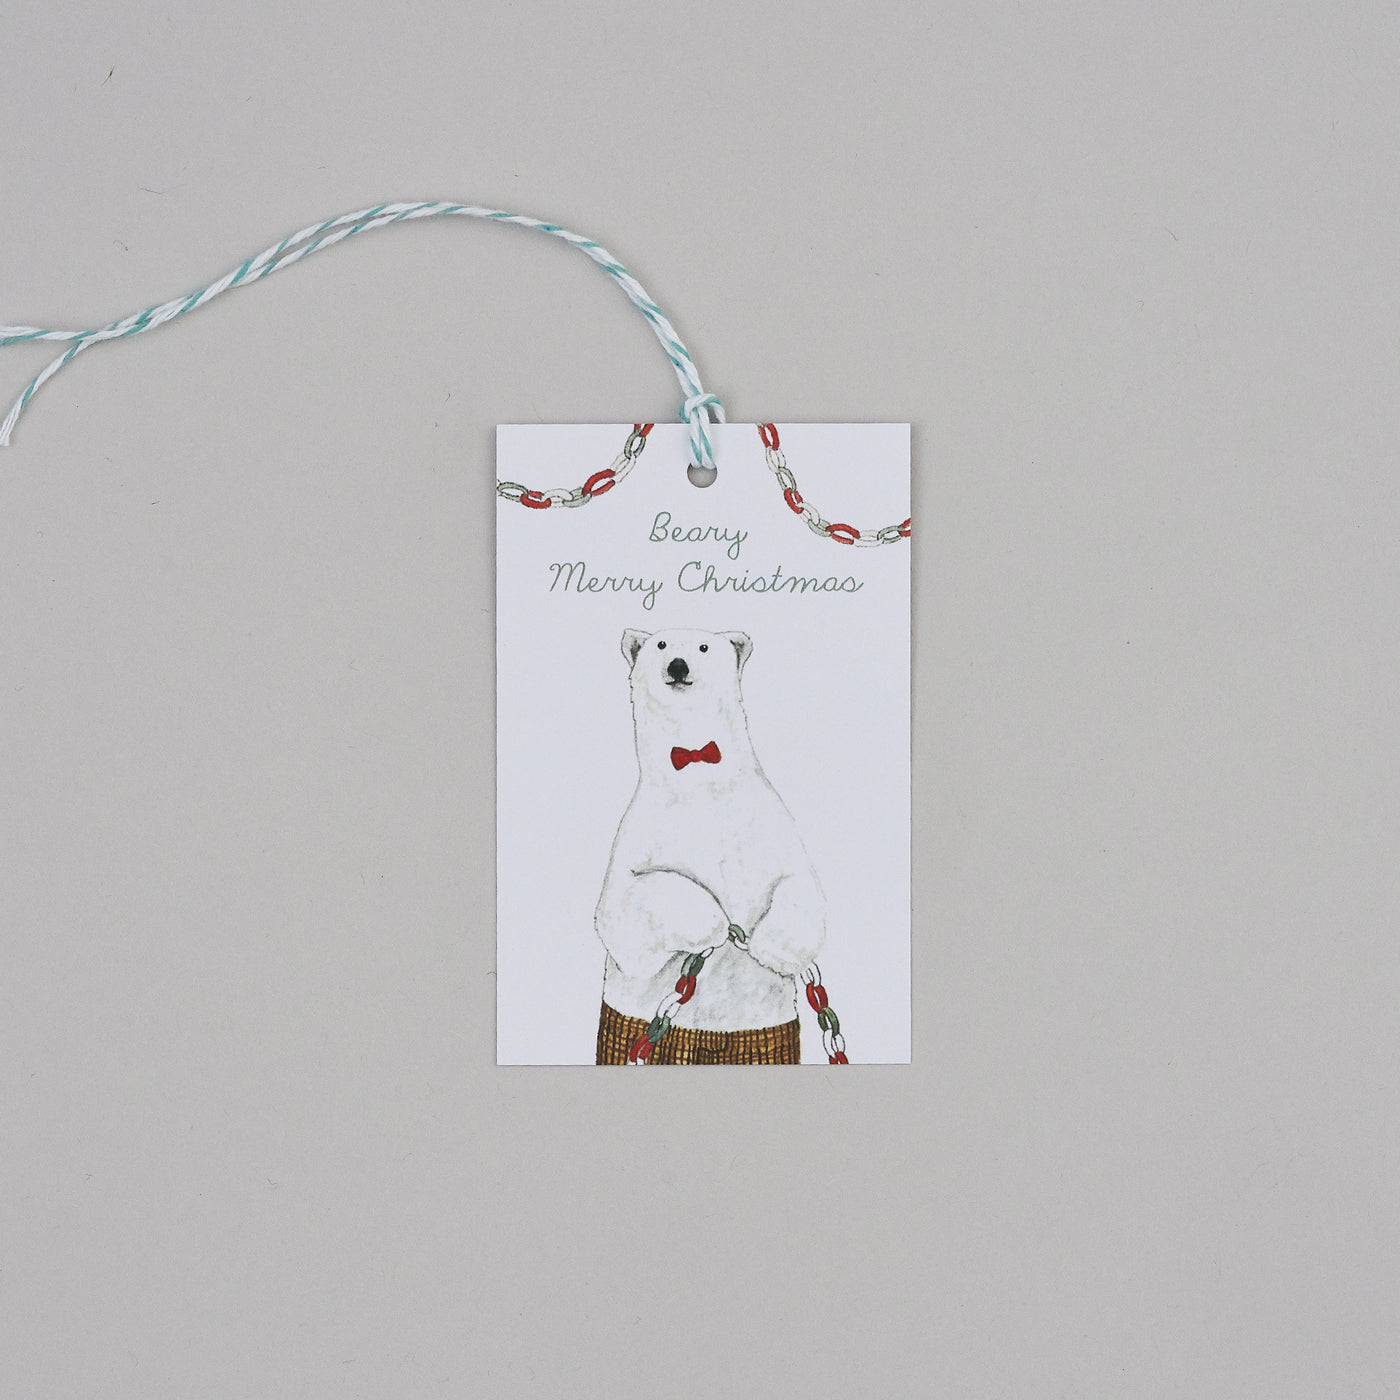 Beary Merry Christmas Gift Tag with polar bear illustration